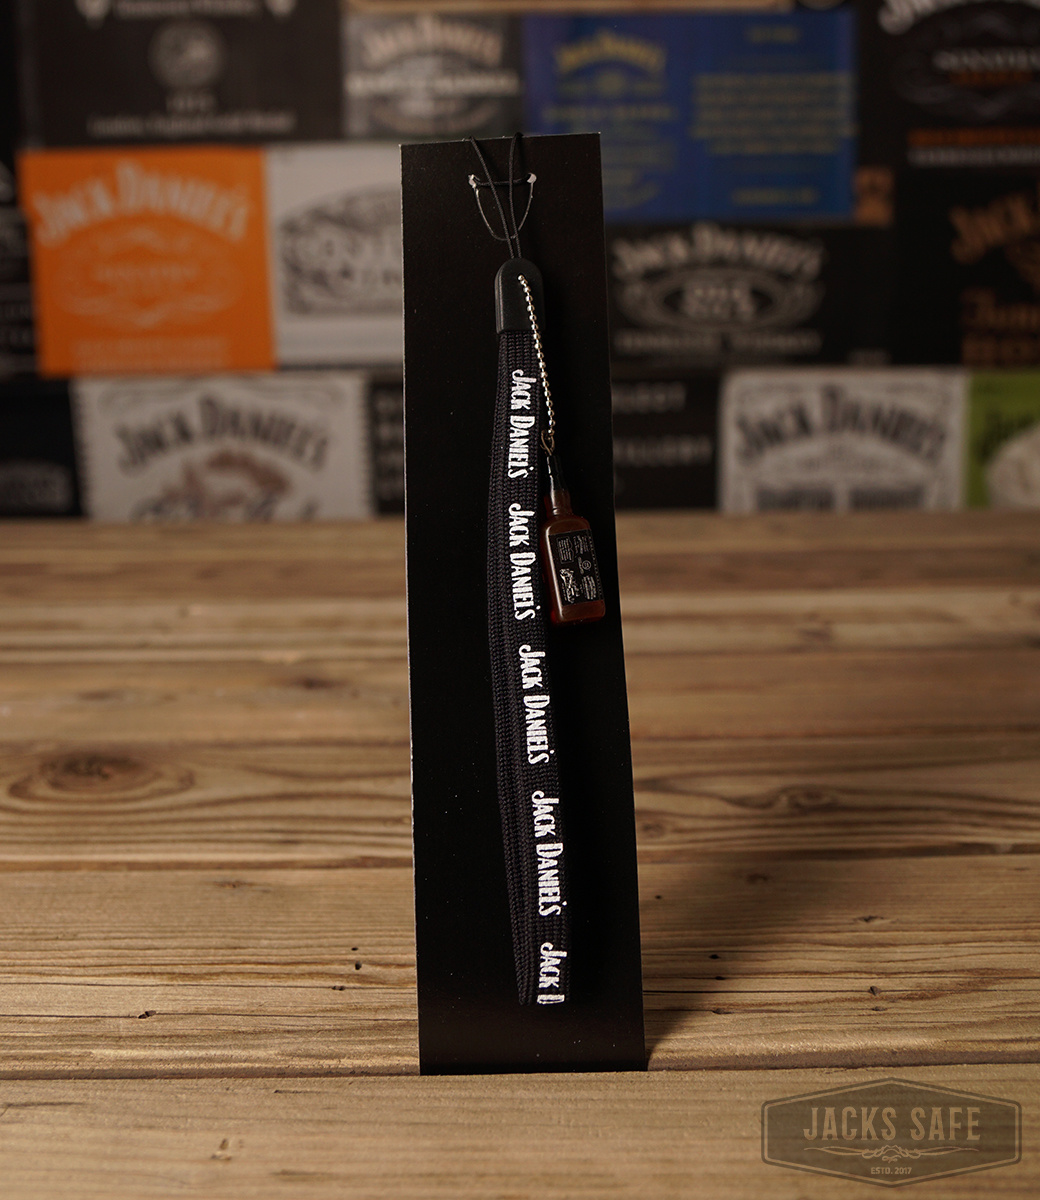 JACK DANIEL'S - Promo Items - Black Label - Phone Cord with mini Jack bottle from JAPAN